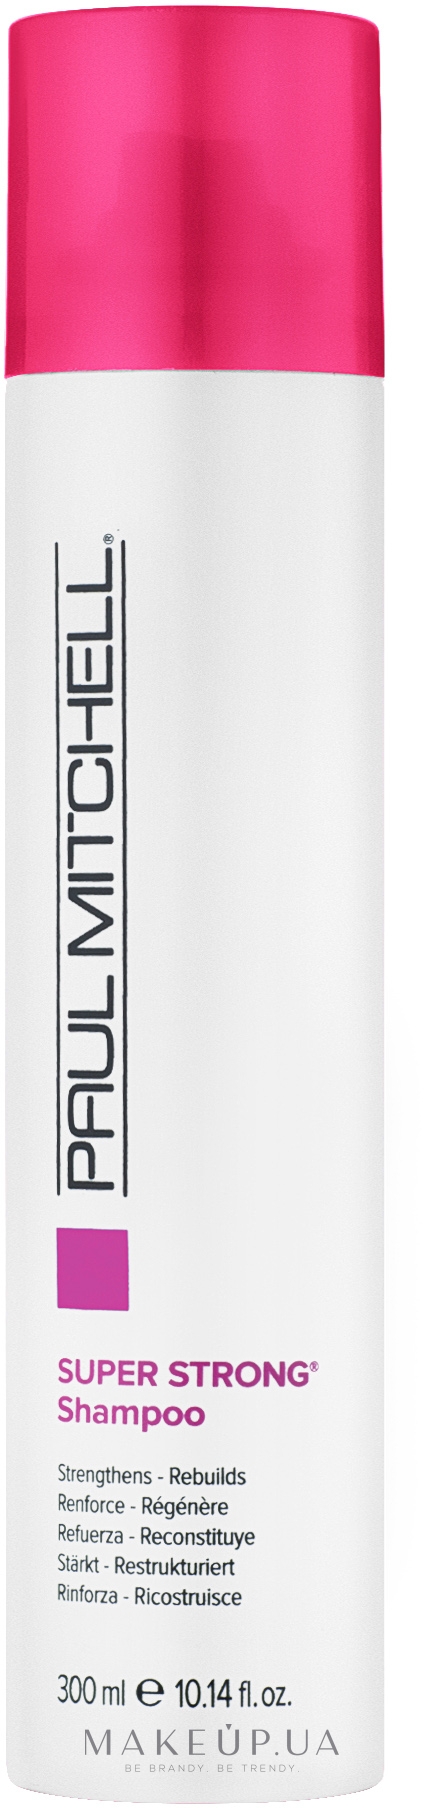 Восстанавливающий и укрепляющий шампунь - Paul Mitchell Strength Super Strong Daily Shampoo — фото 300ml